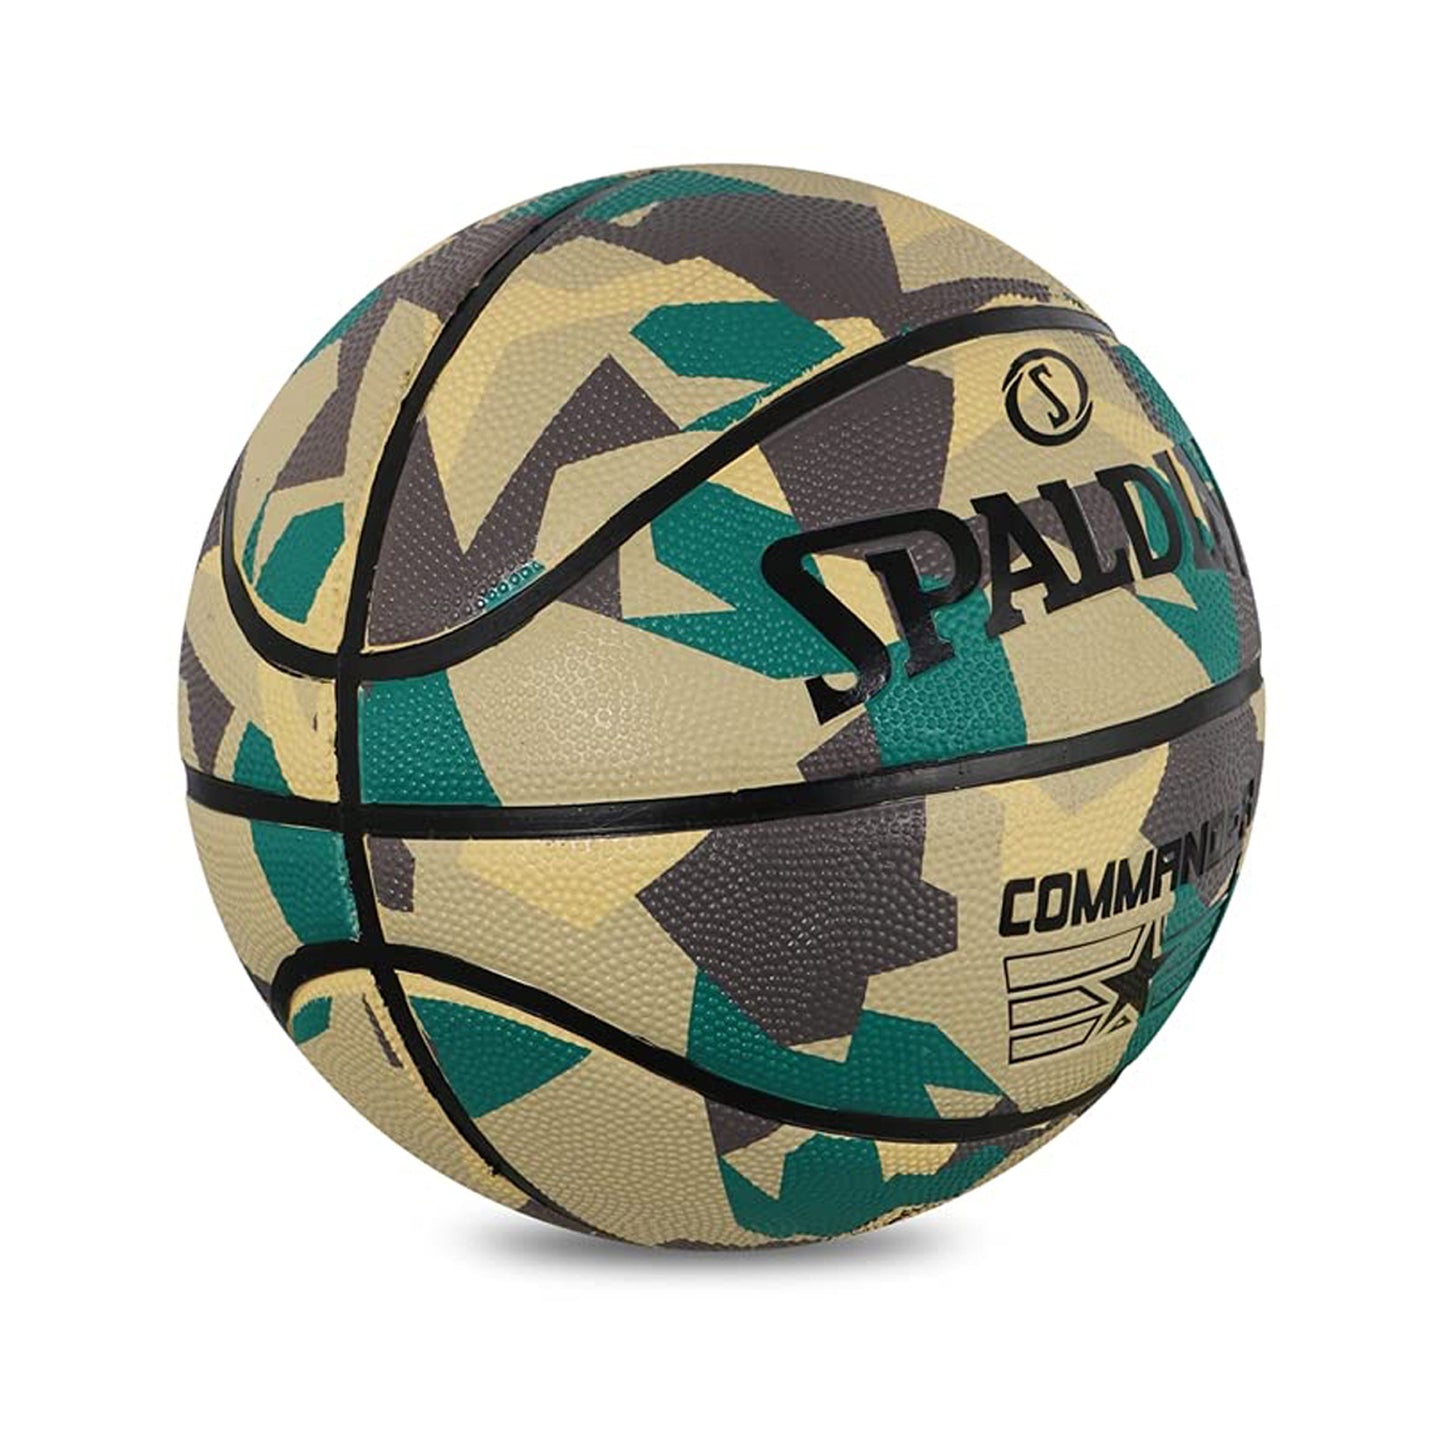 Spalding Commander Poly Basketball, Size 7 (Green) - Best Price online Prokicksports.com